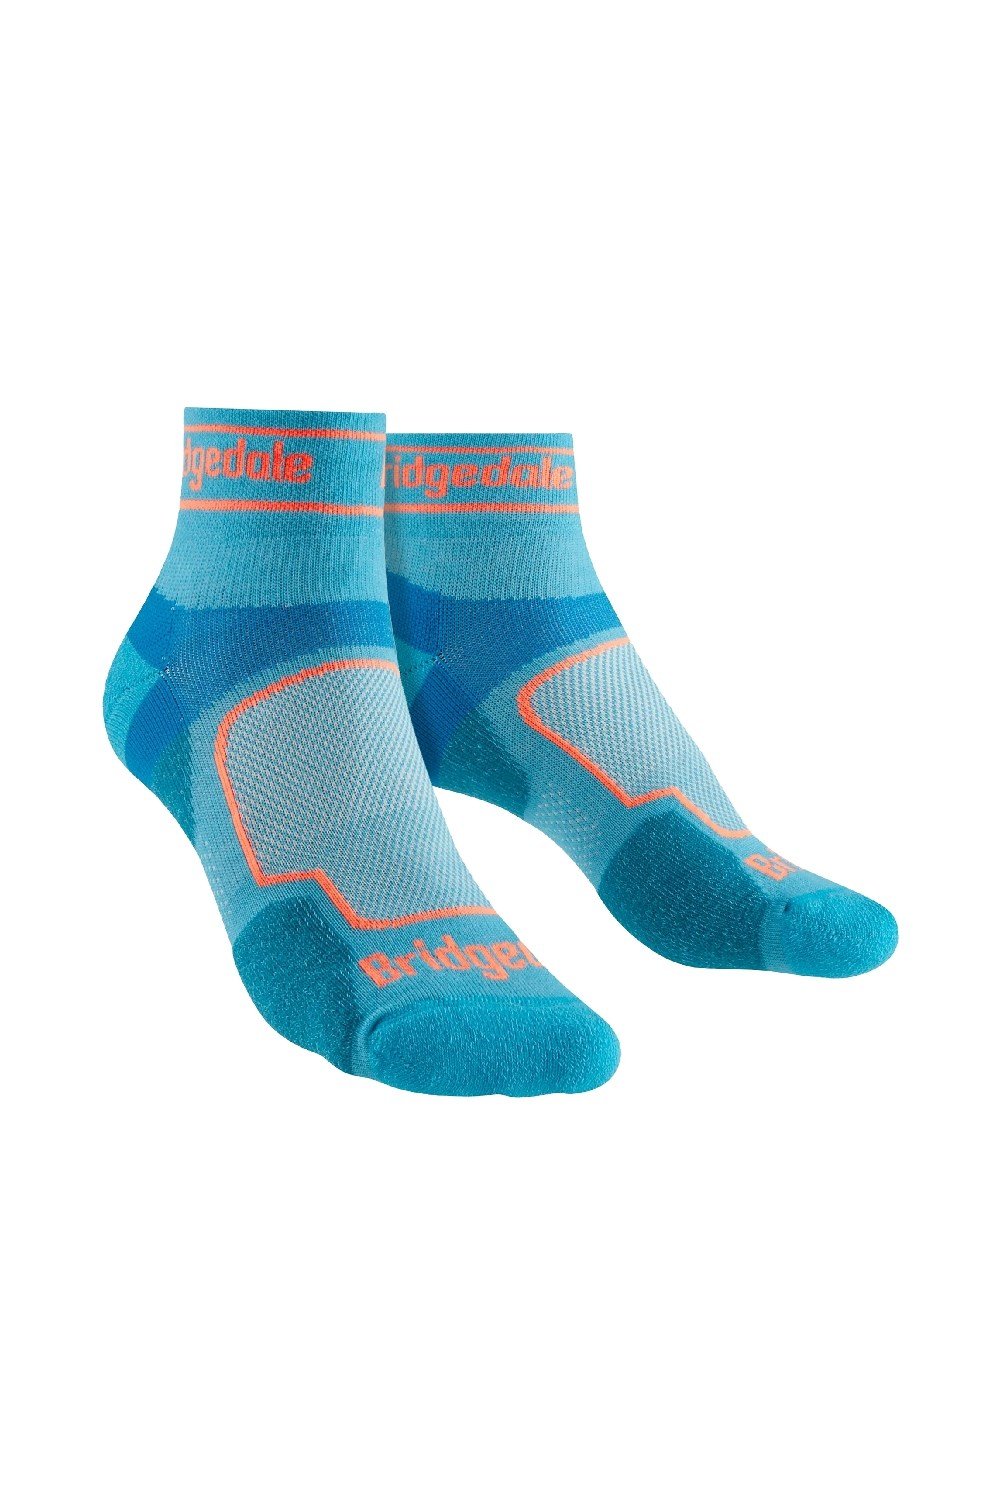 Womens Running Ultralight Coolmax Socks -